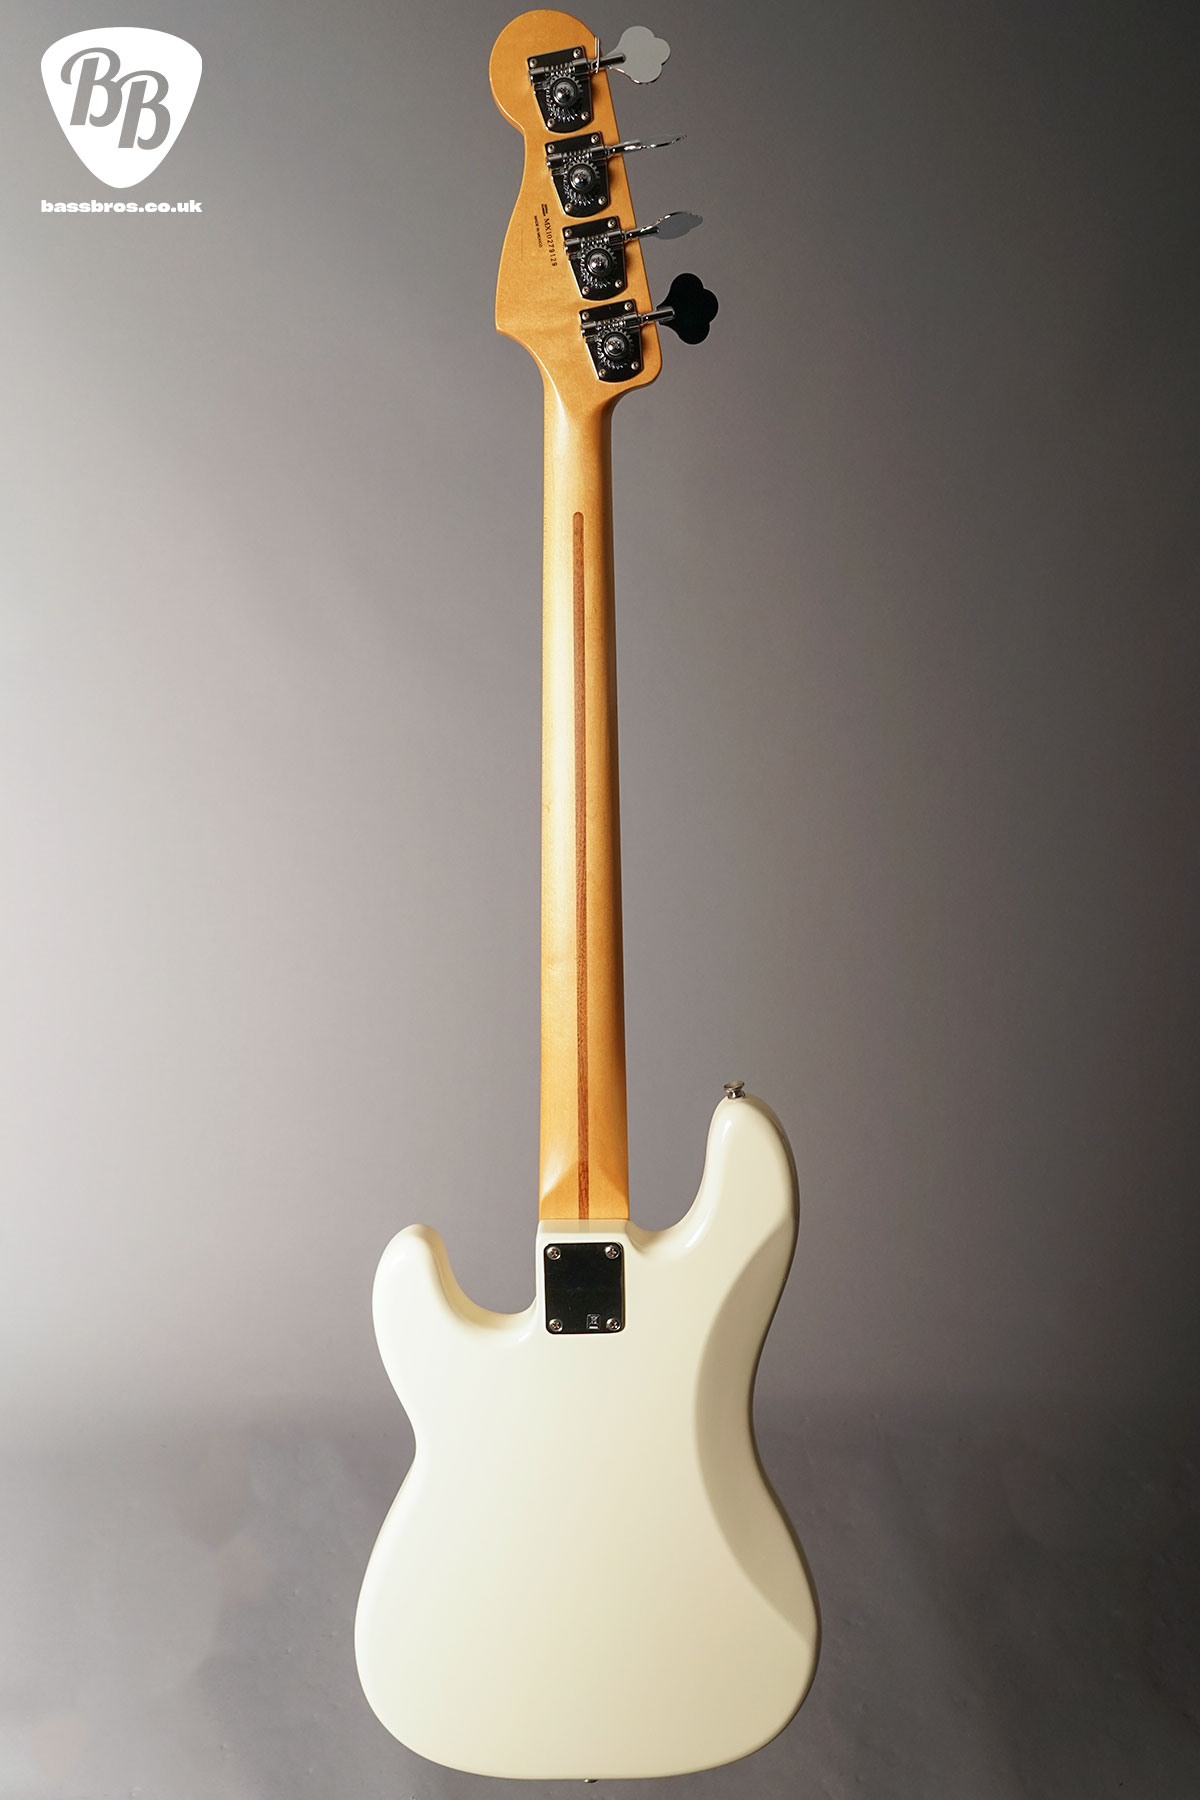 2010 Fender Standard Precision Bass | BassBros